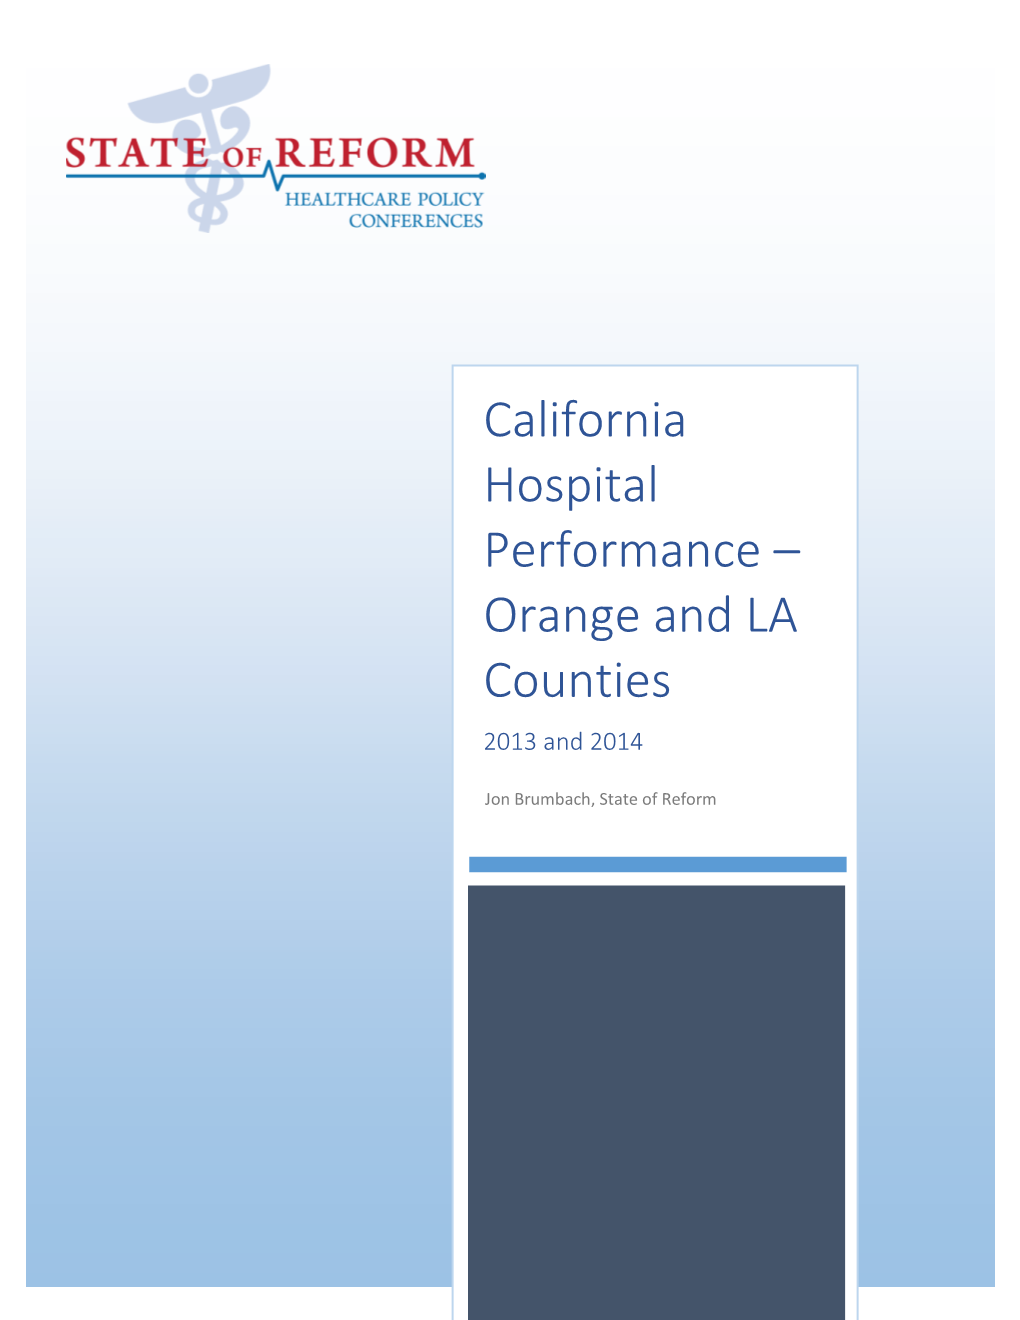 California Hospital Performance – Orange and LA